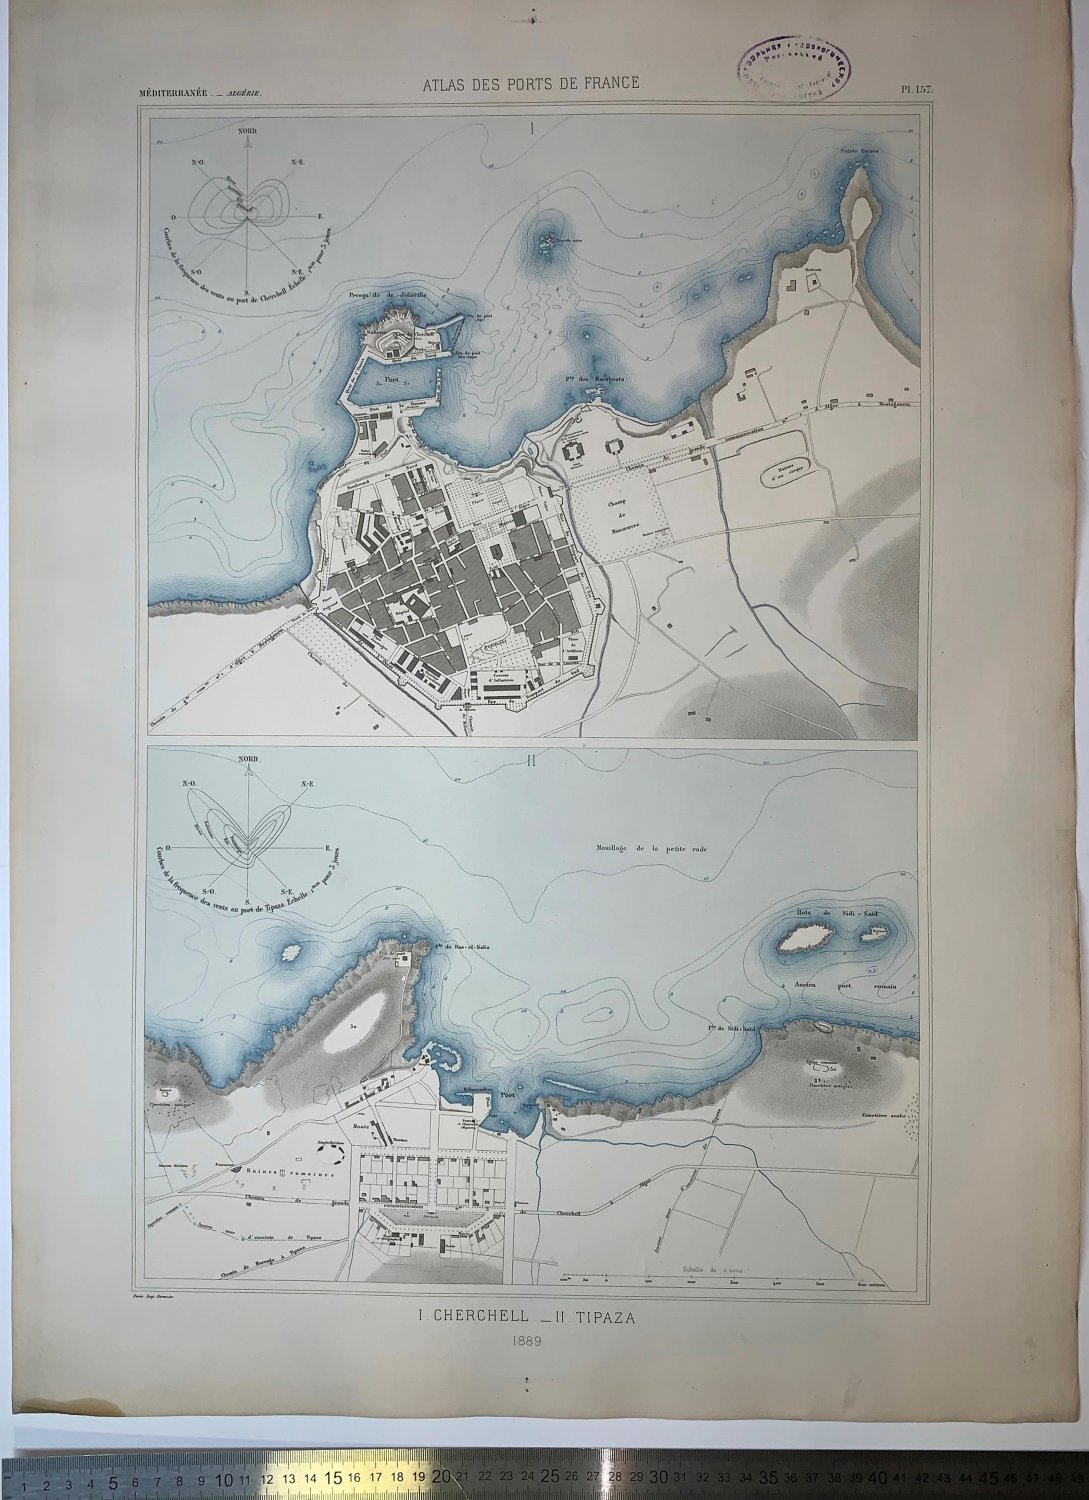 Atlas des ports de France. I. Cherchell. II. Tipaza